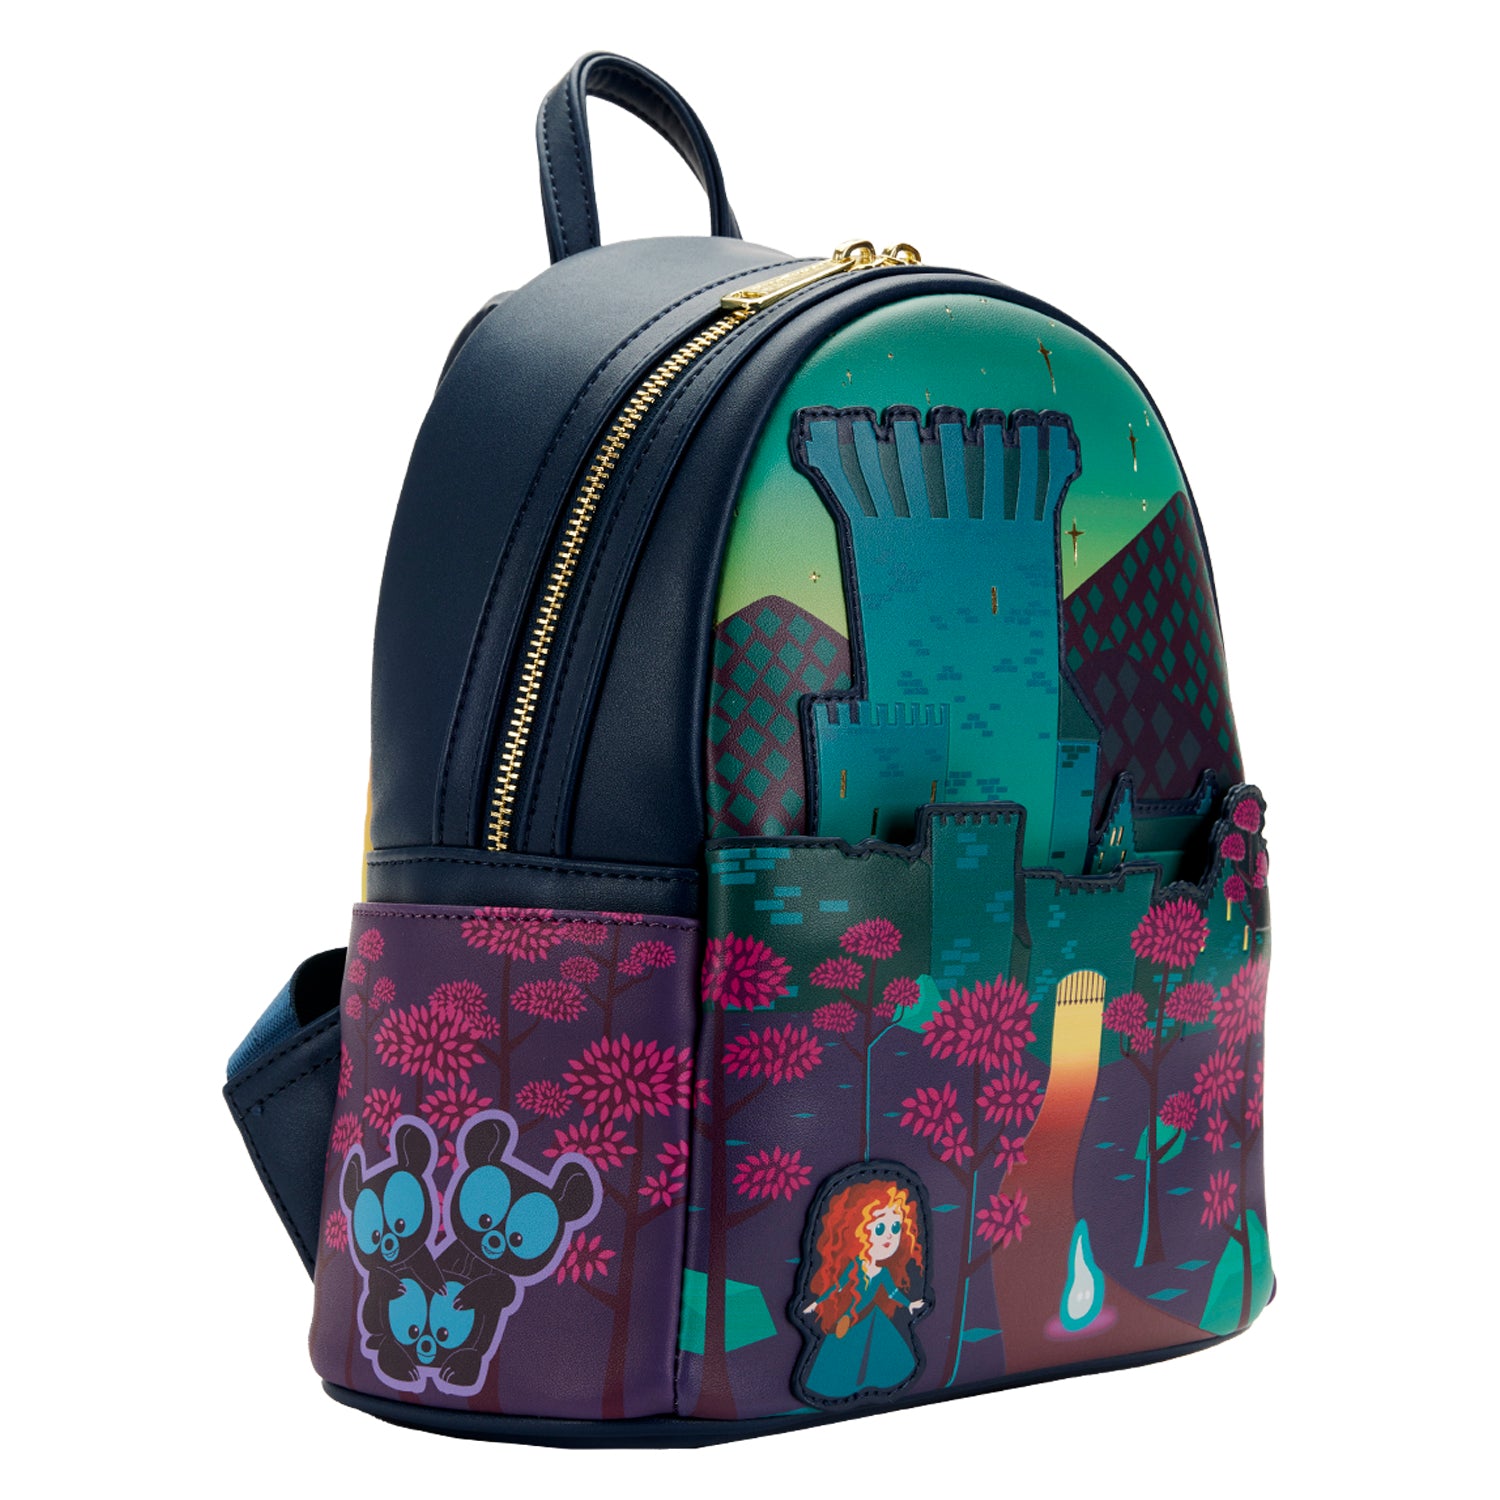 Disney Tangled Princess Castle Mini Backpack Loungefly